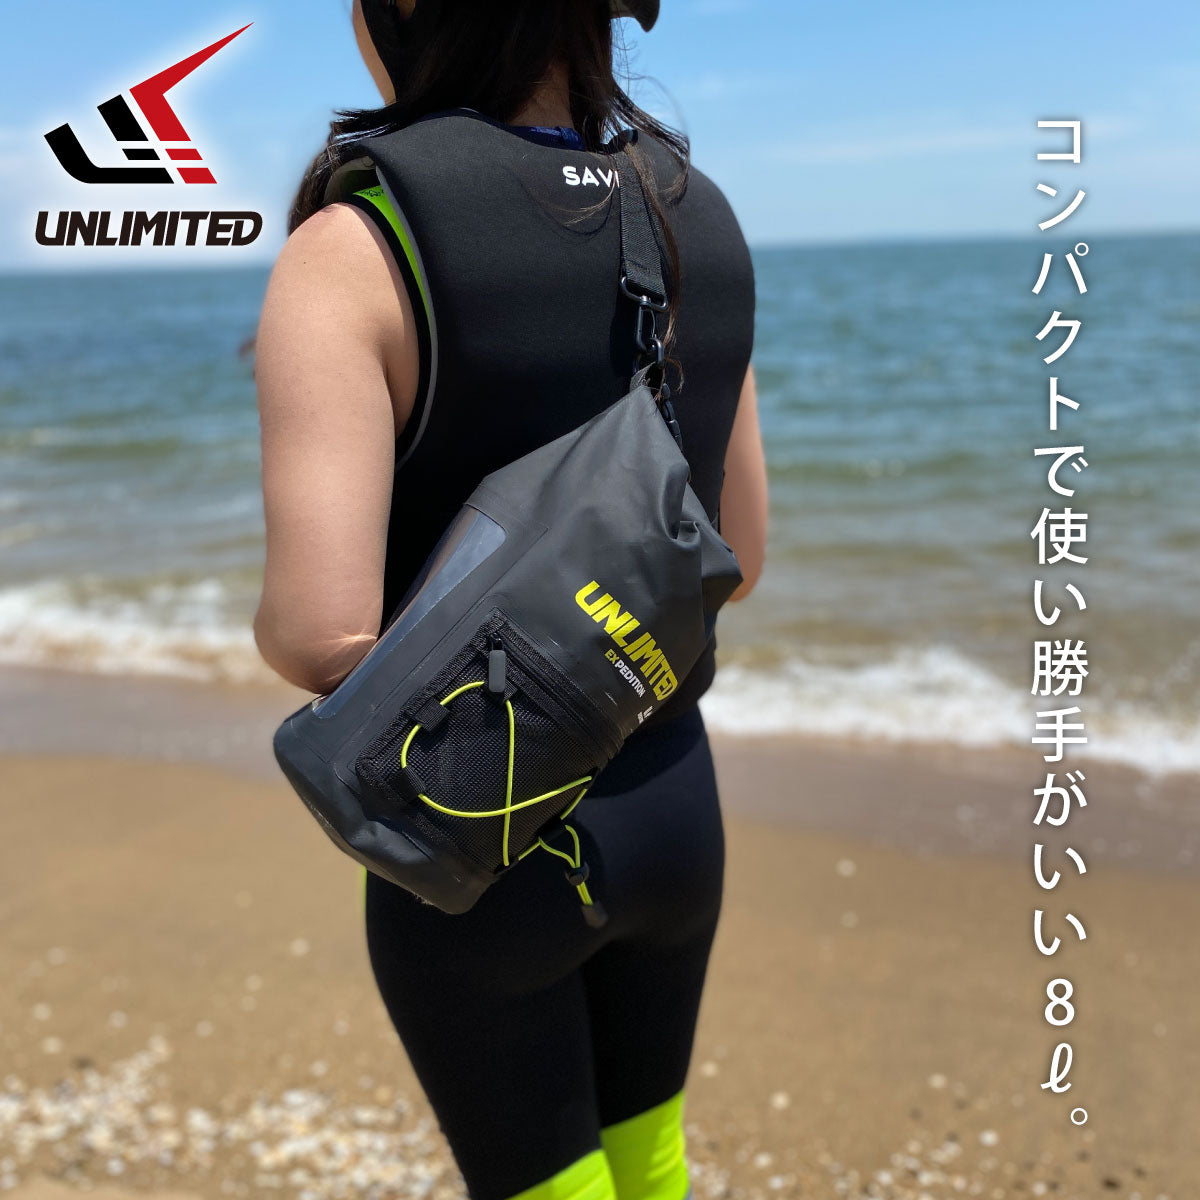 UNLIMITED Unlimited Roll Top Smartphone SPLASH PROOF BAG Waterproof Beach ULW825